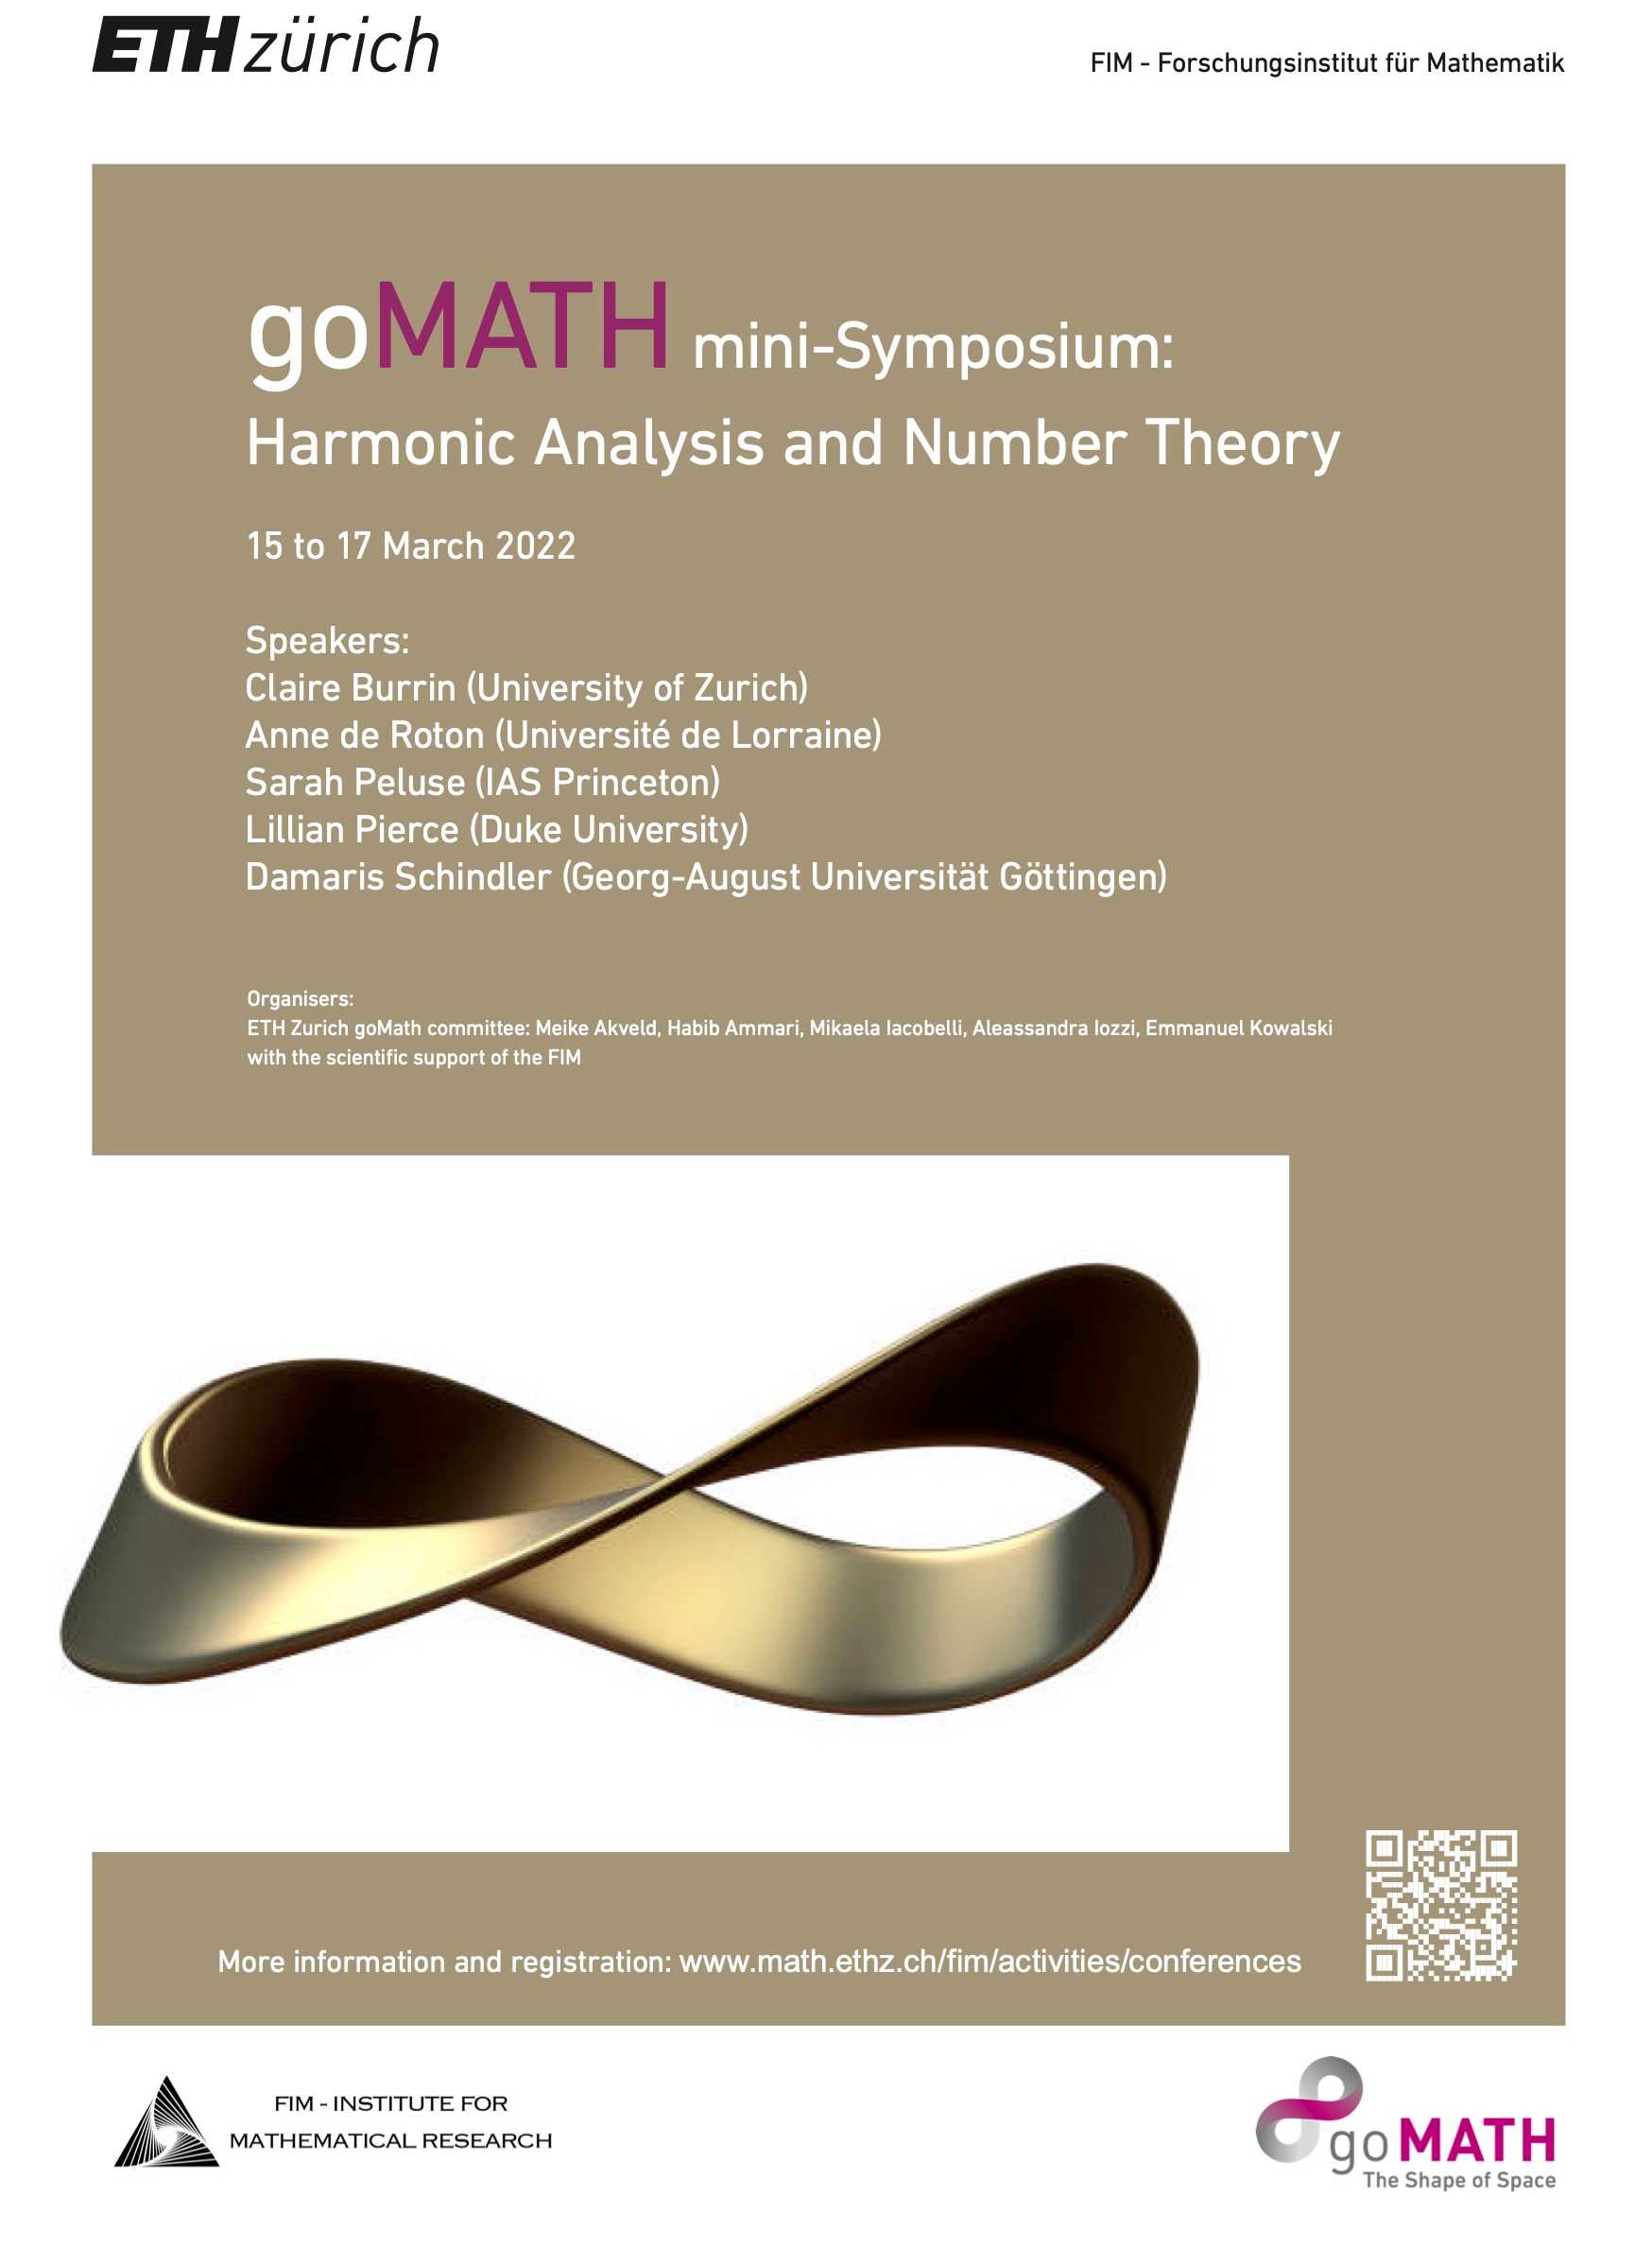 Vergrösserte Ansicht: Poster goMATH mini-symposium